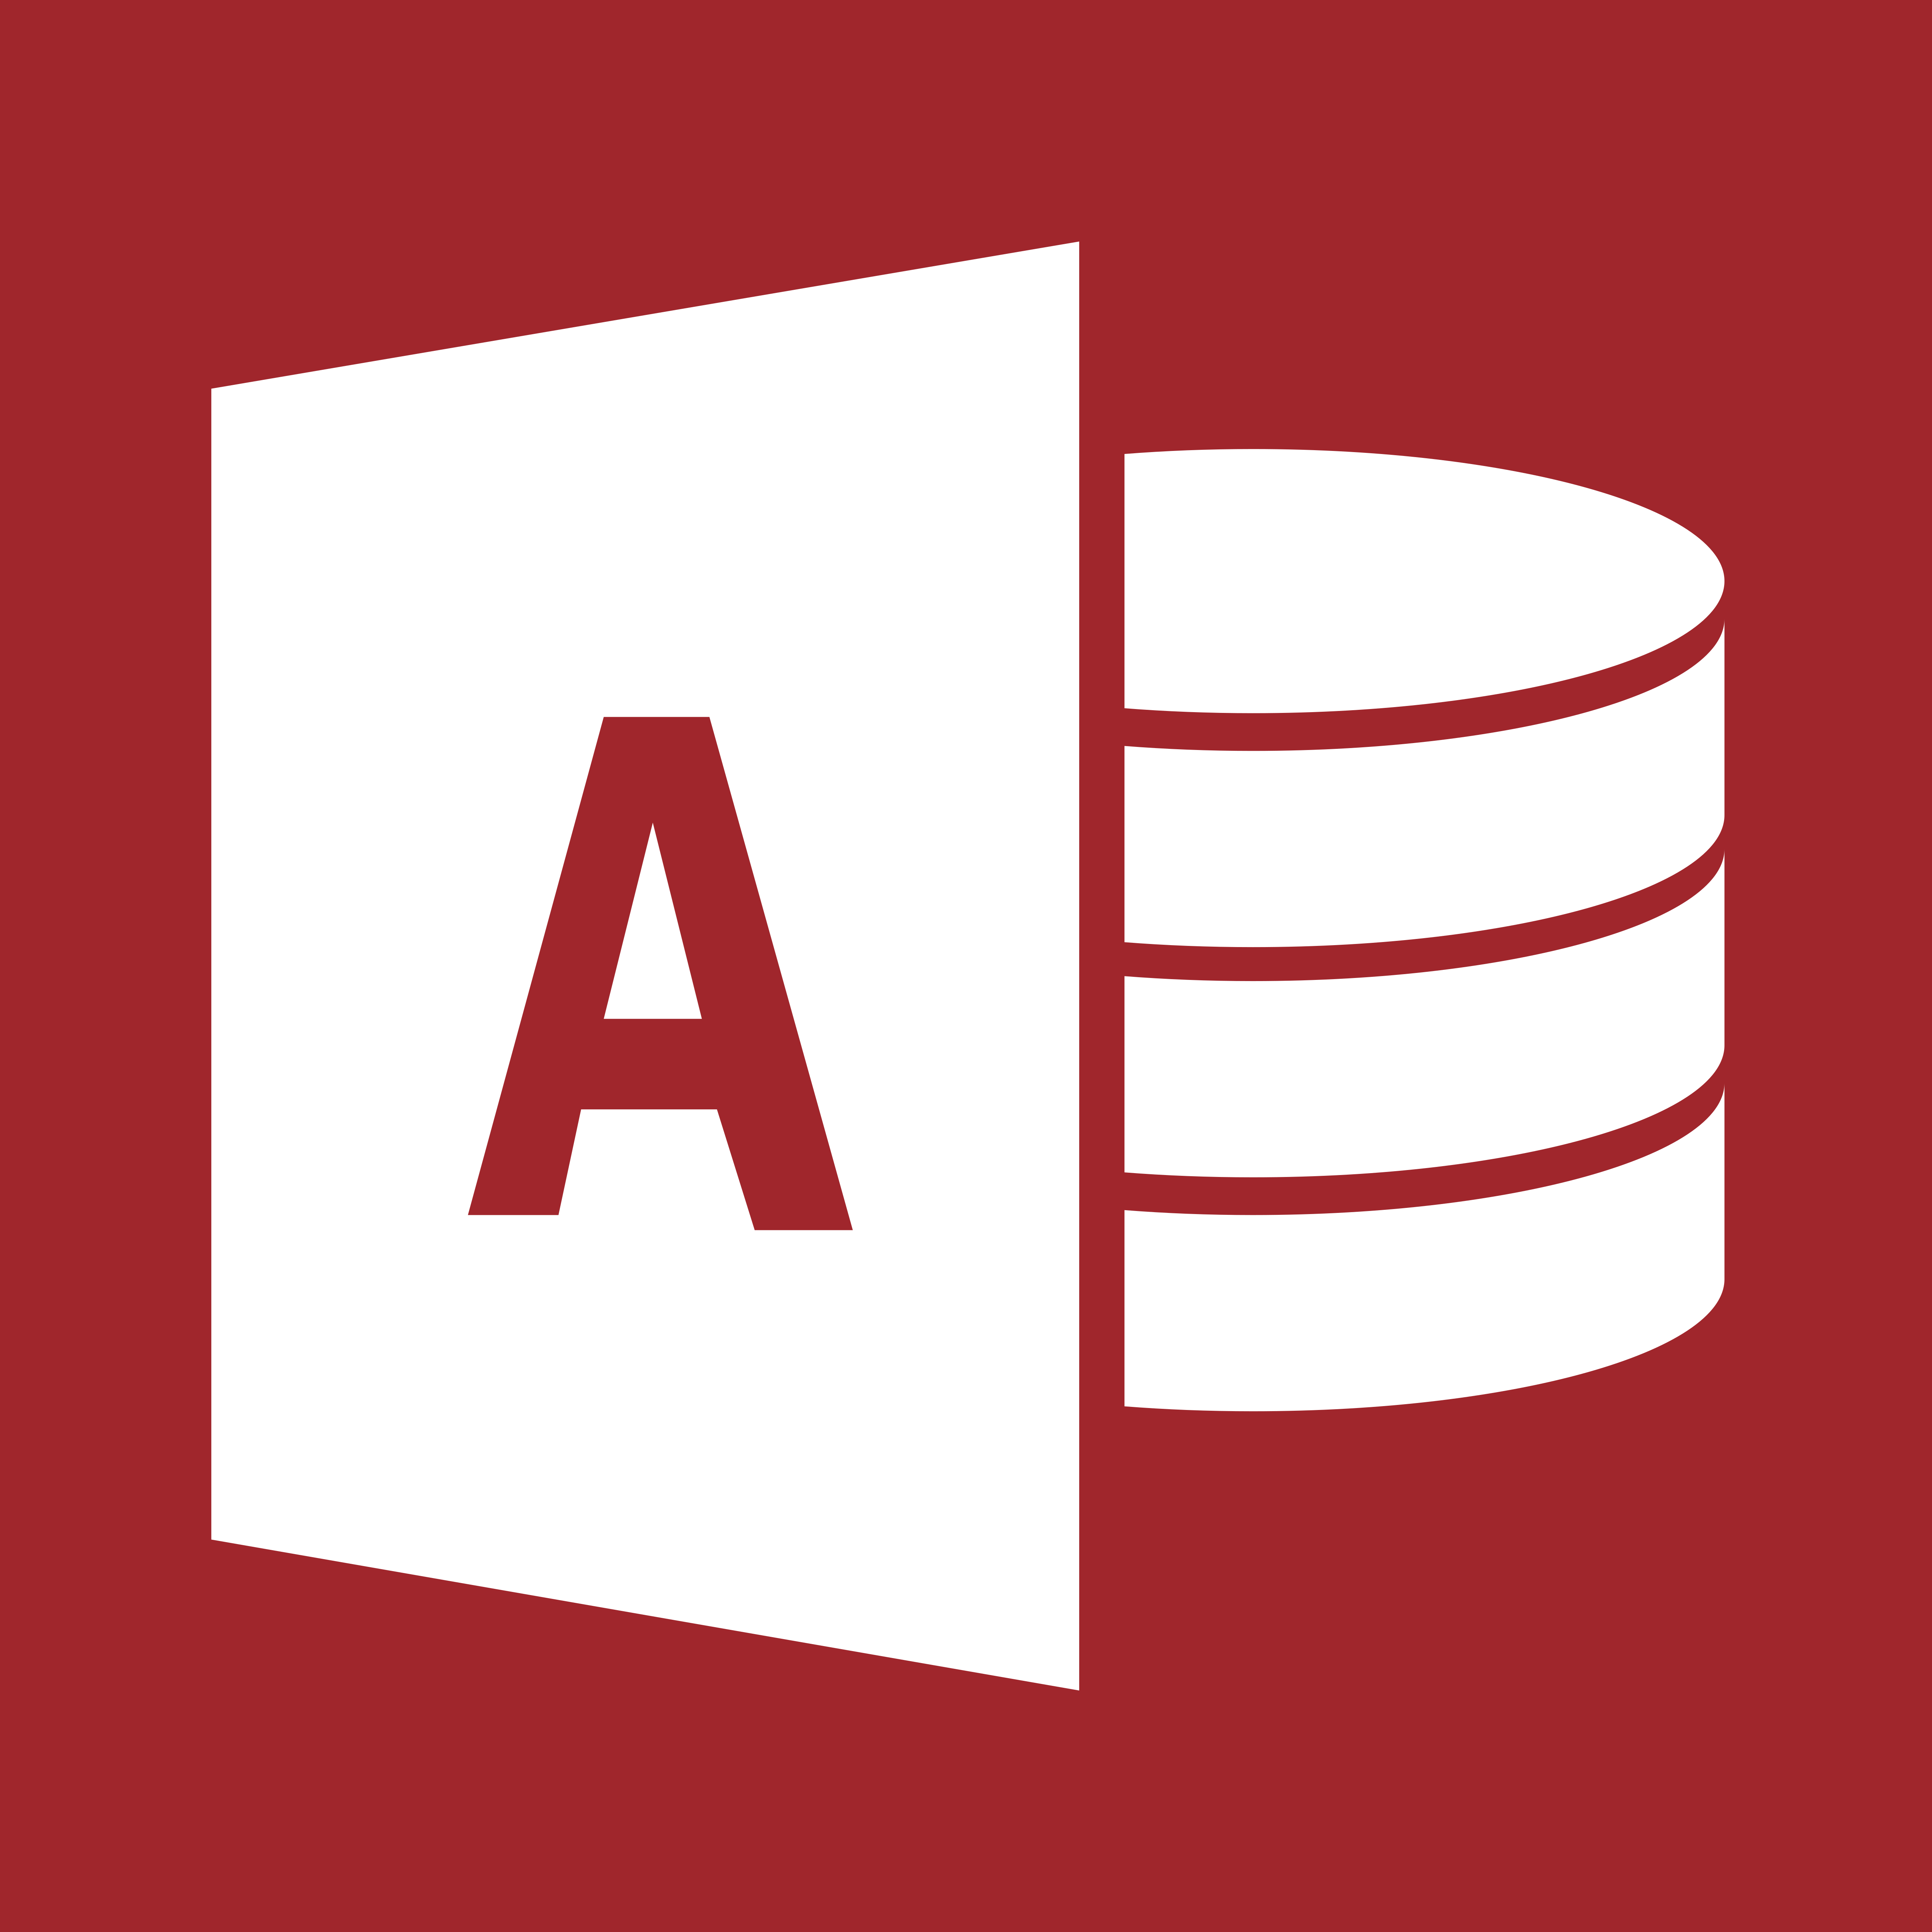 База данных access логотип. Иконка MS access. Microsoft access значок. СУБД Microsoft access 2016. Access pdf